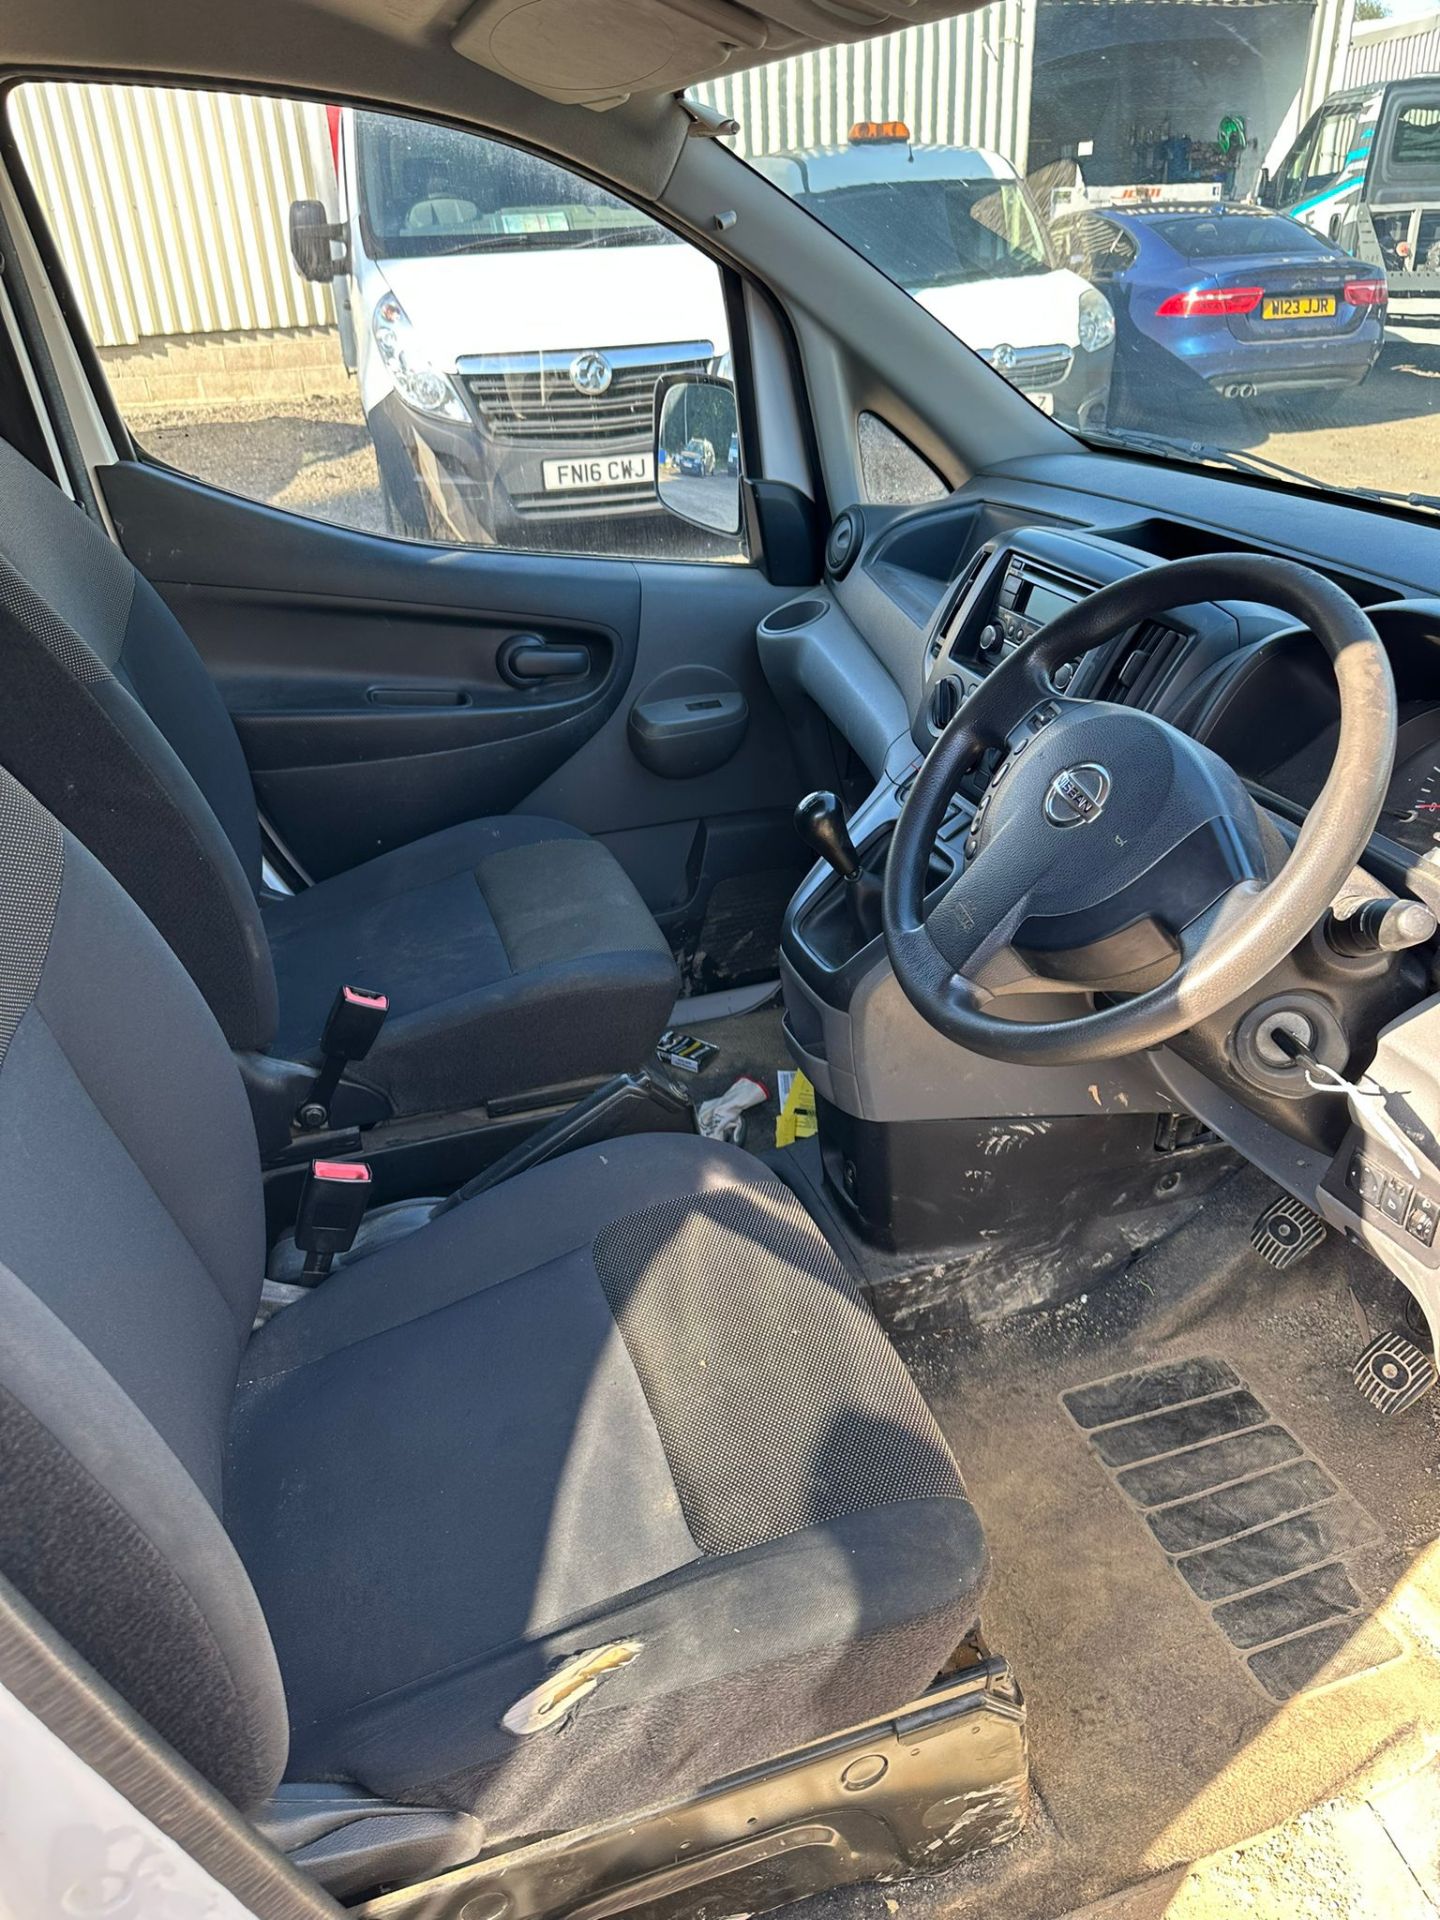 2018 18 Nissan nv200 Panel van - 57k miles - Euro 6 - 1 key - Image 6 of 6